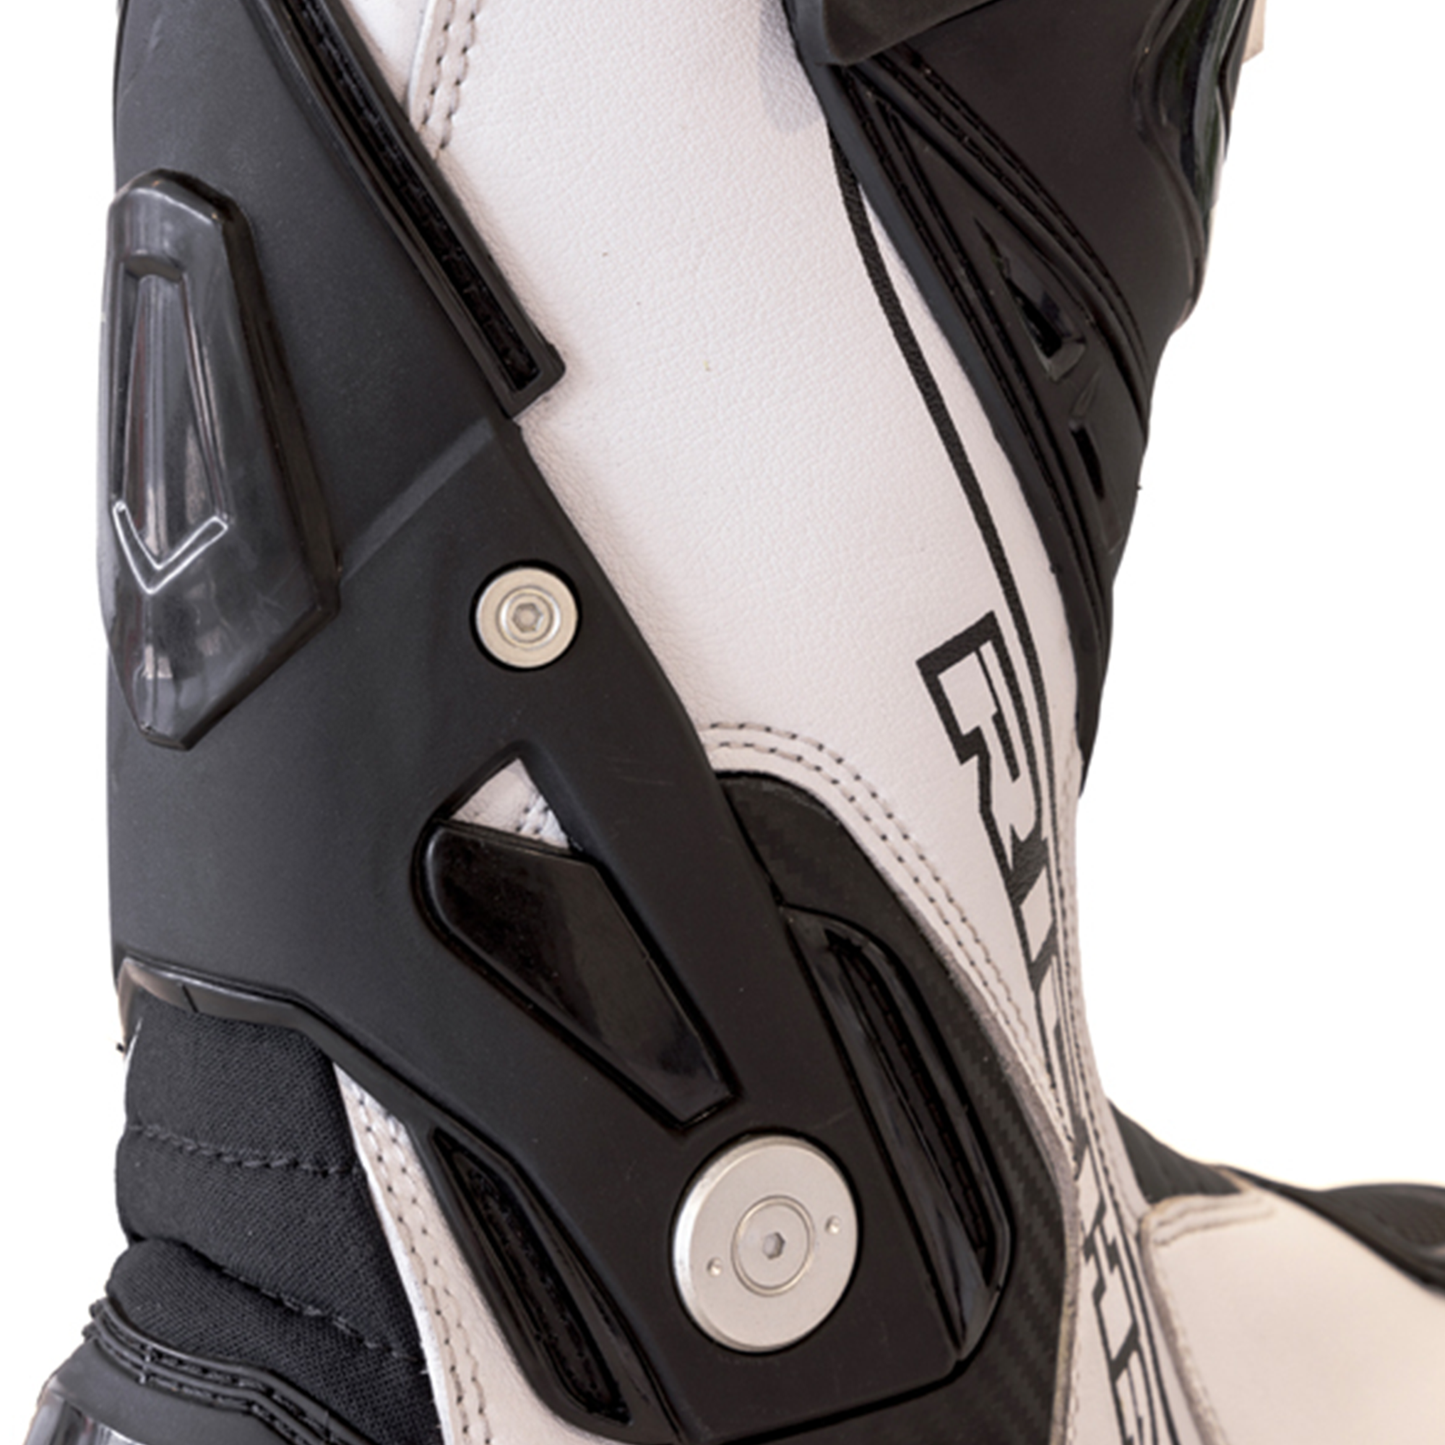 Richa Blade Waterproof Boots - Black/White